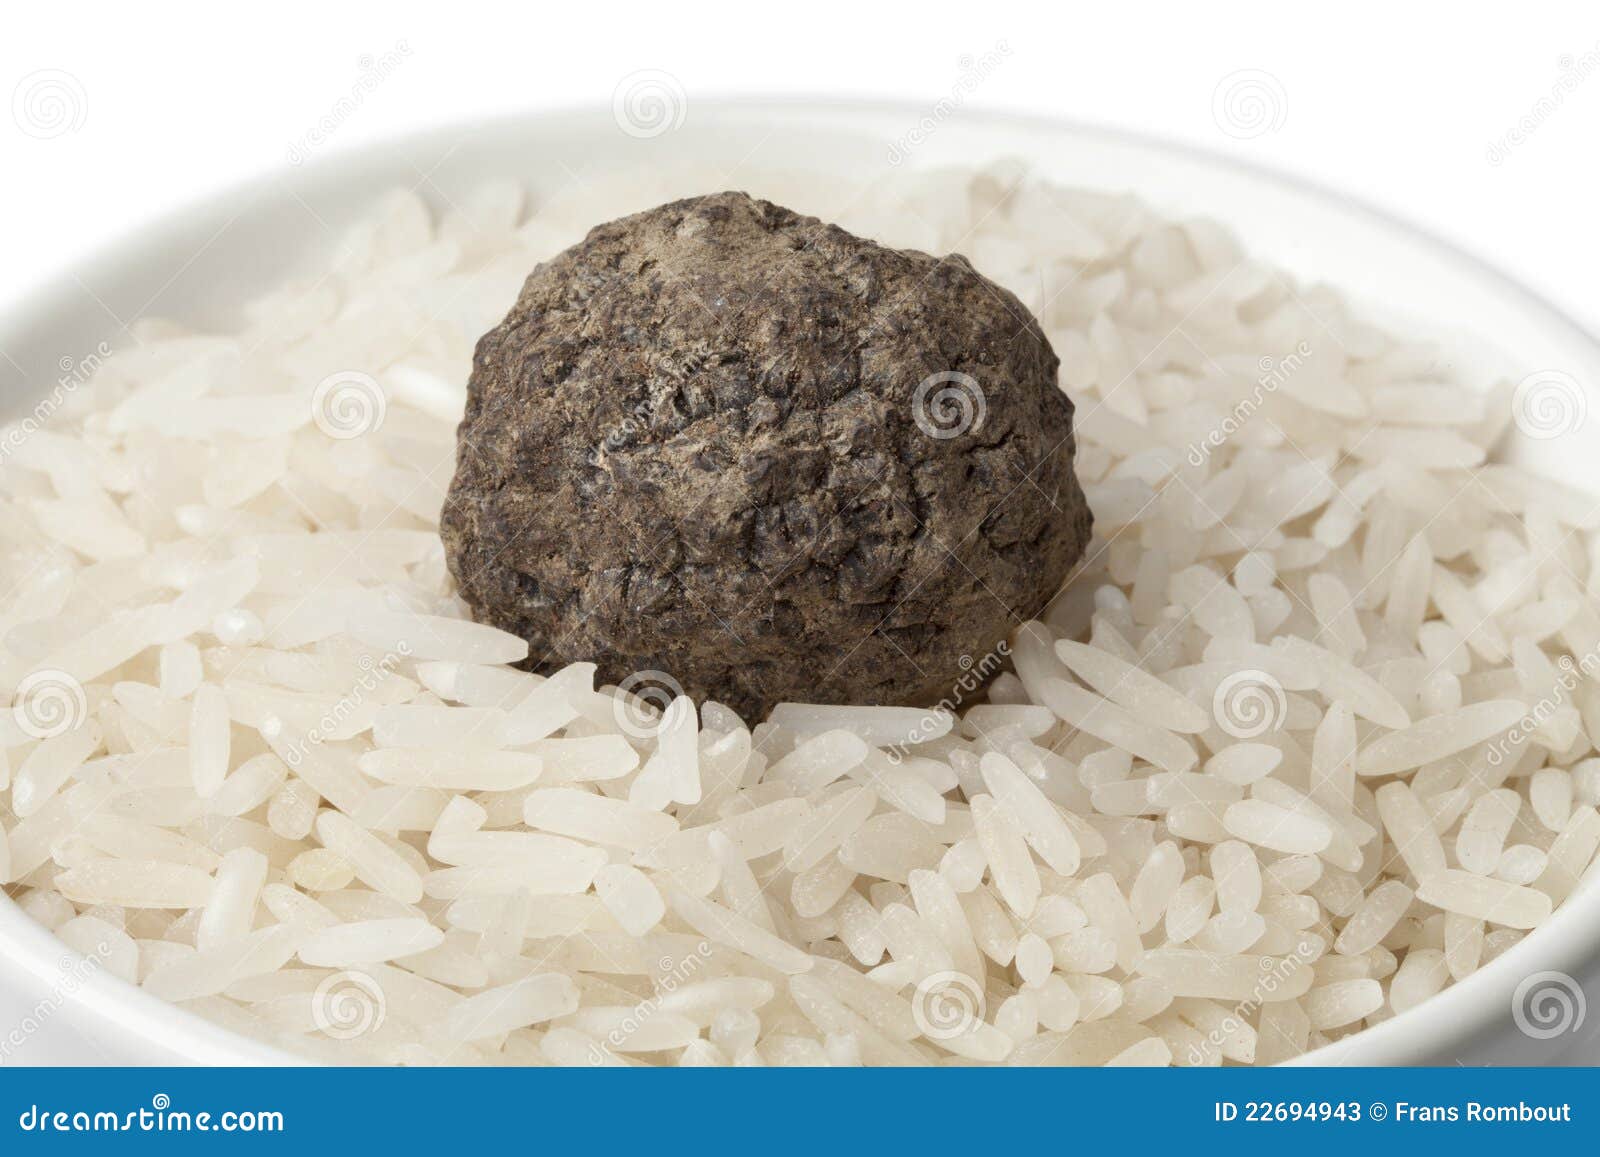 cup-raw-rice-black-winter-truffle-22694943.jpg